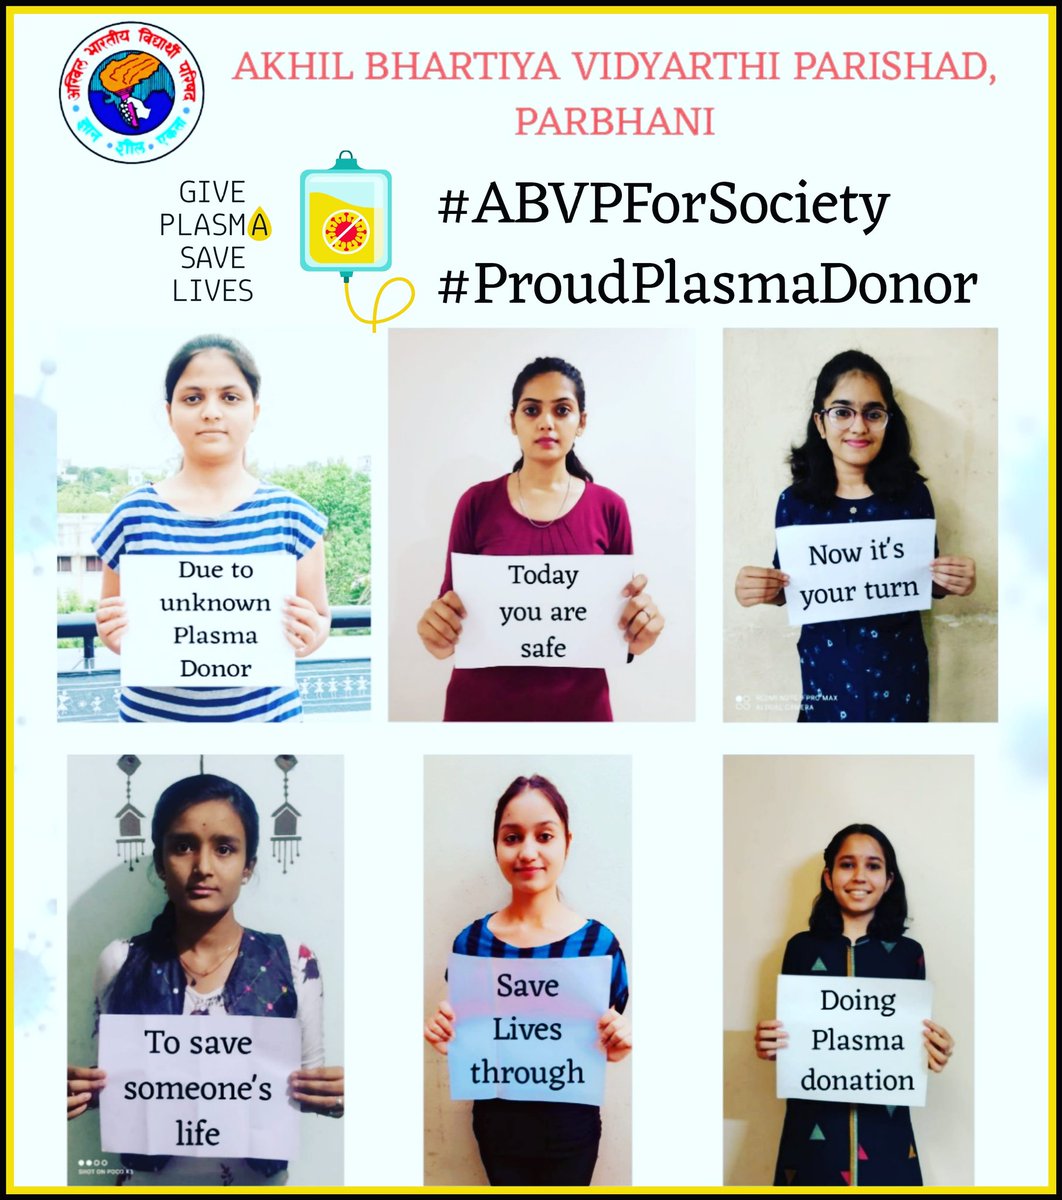 #ABVPForSociety #ProudplasmaDonor                            #Besupportive                
#Becareful #DonatePlasmaSaveLives 
@mahaabvp @ABVPVoice